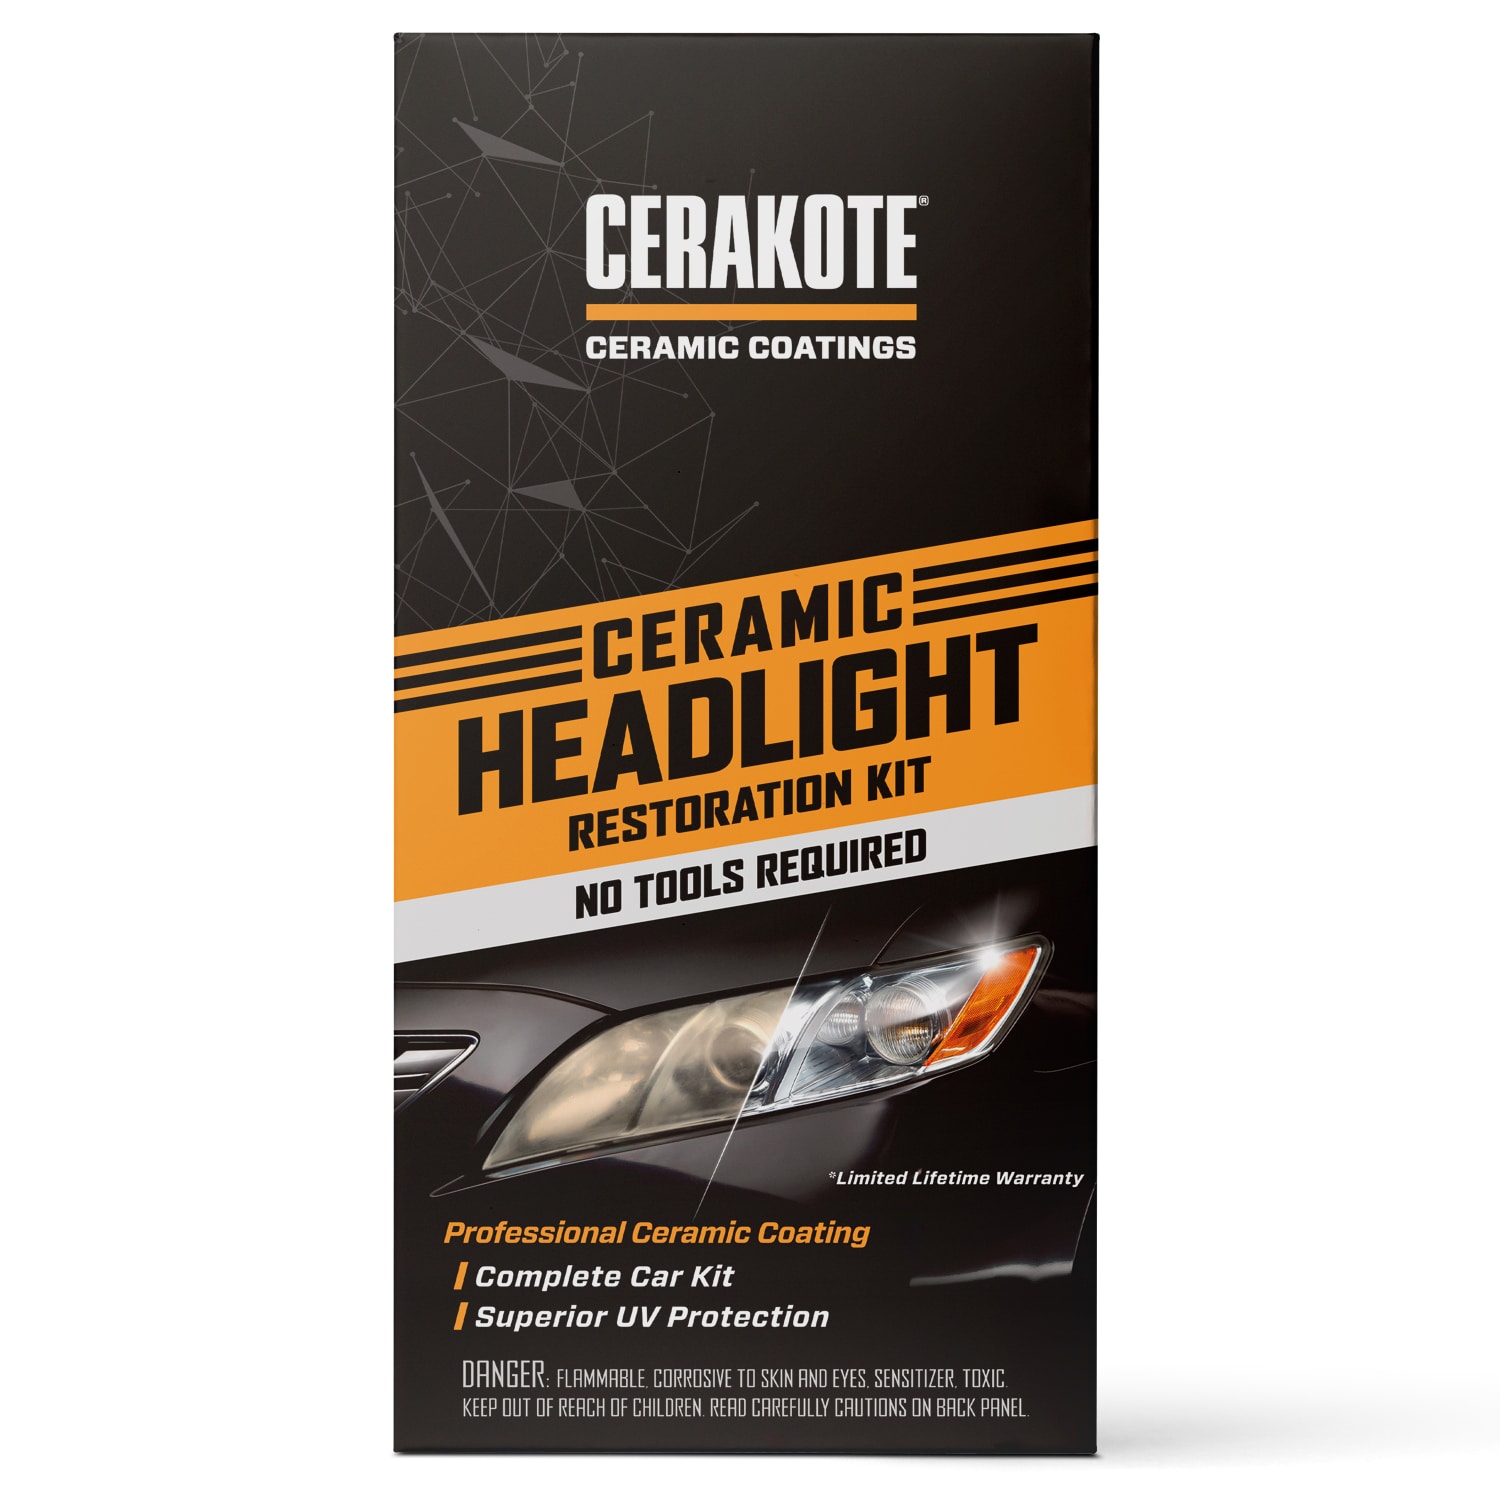 Headlight Restoration Kit with Long-Lasting UV Coating